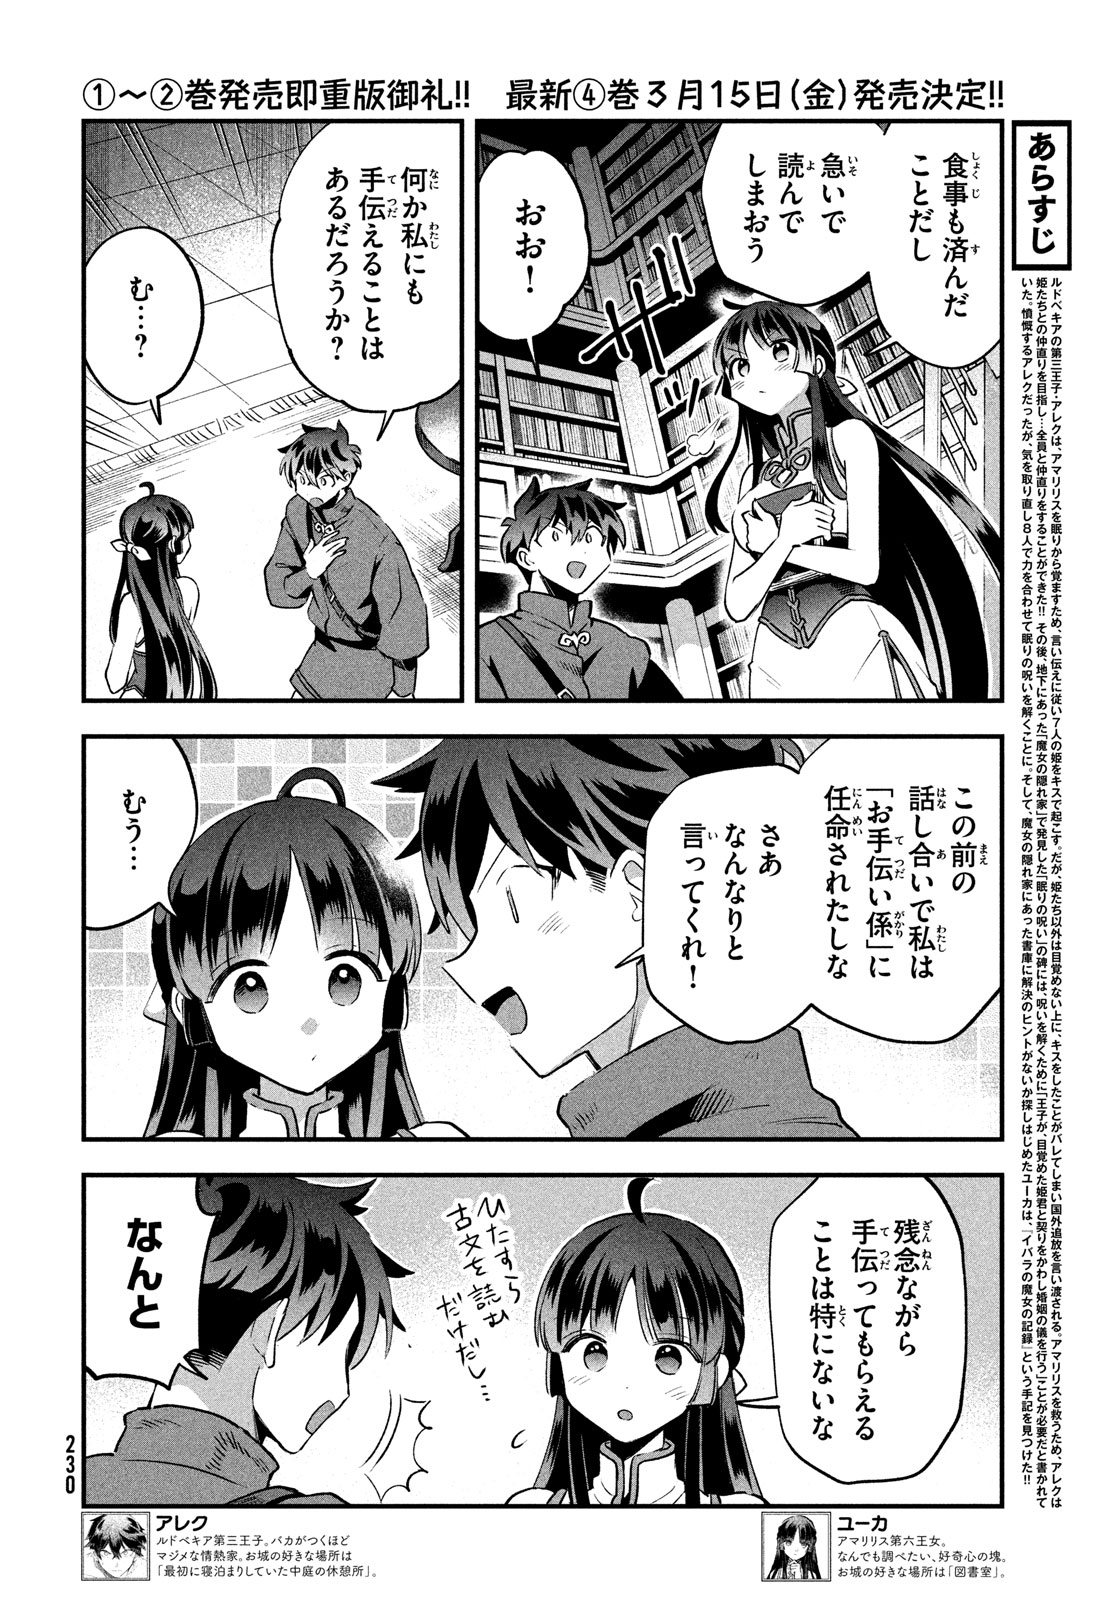 7-nin no Nemuri Hime - Chapter 34 - Page 2